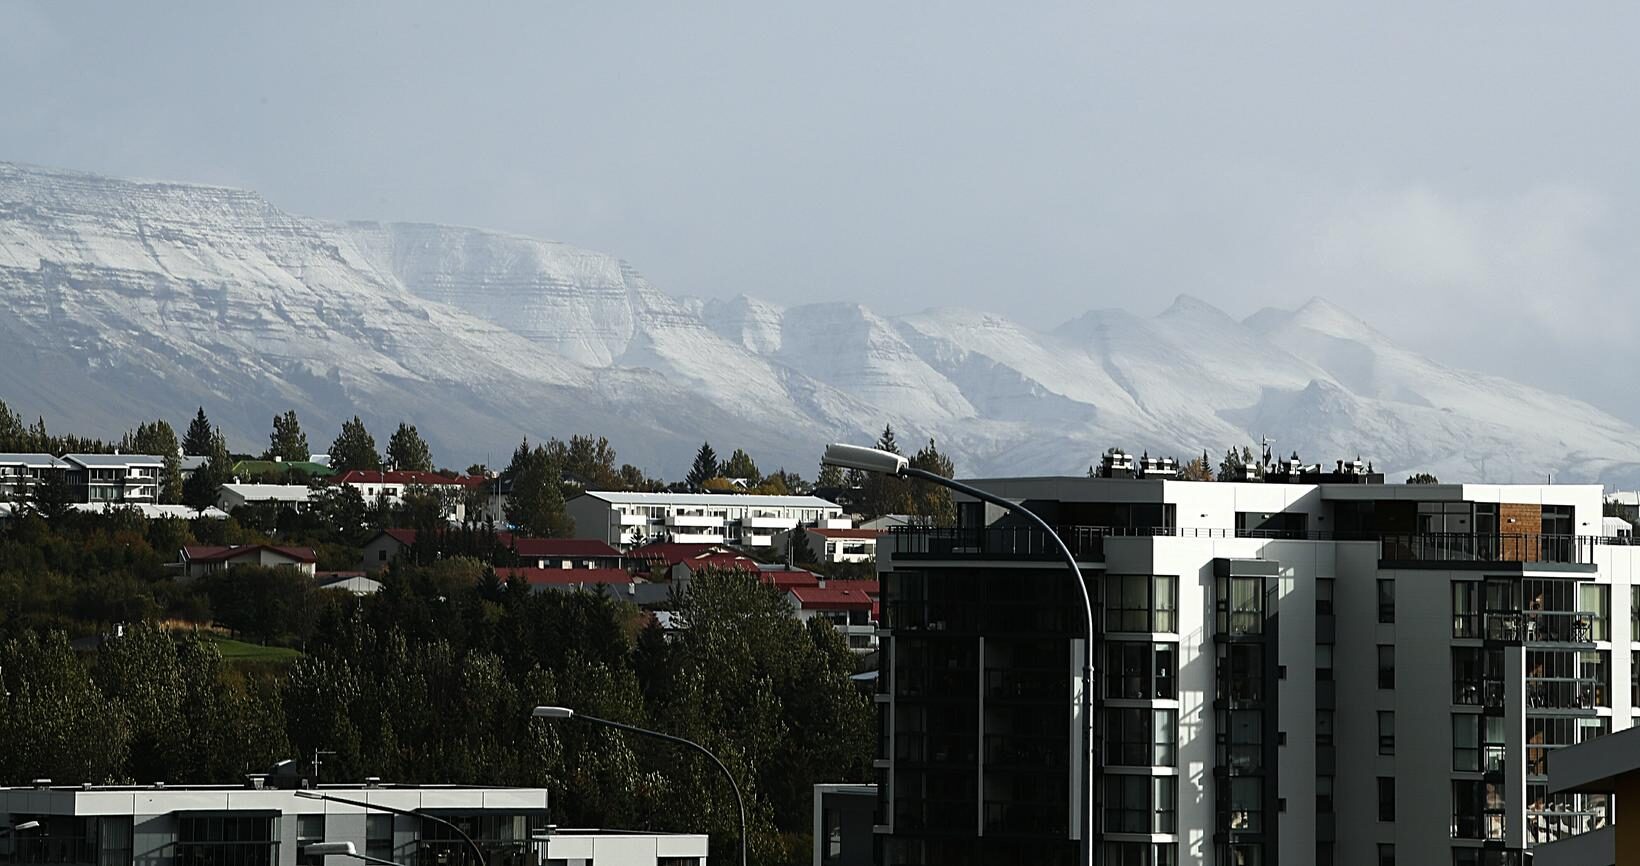 Esja mountain, seen from Reykjavík, this morning.